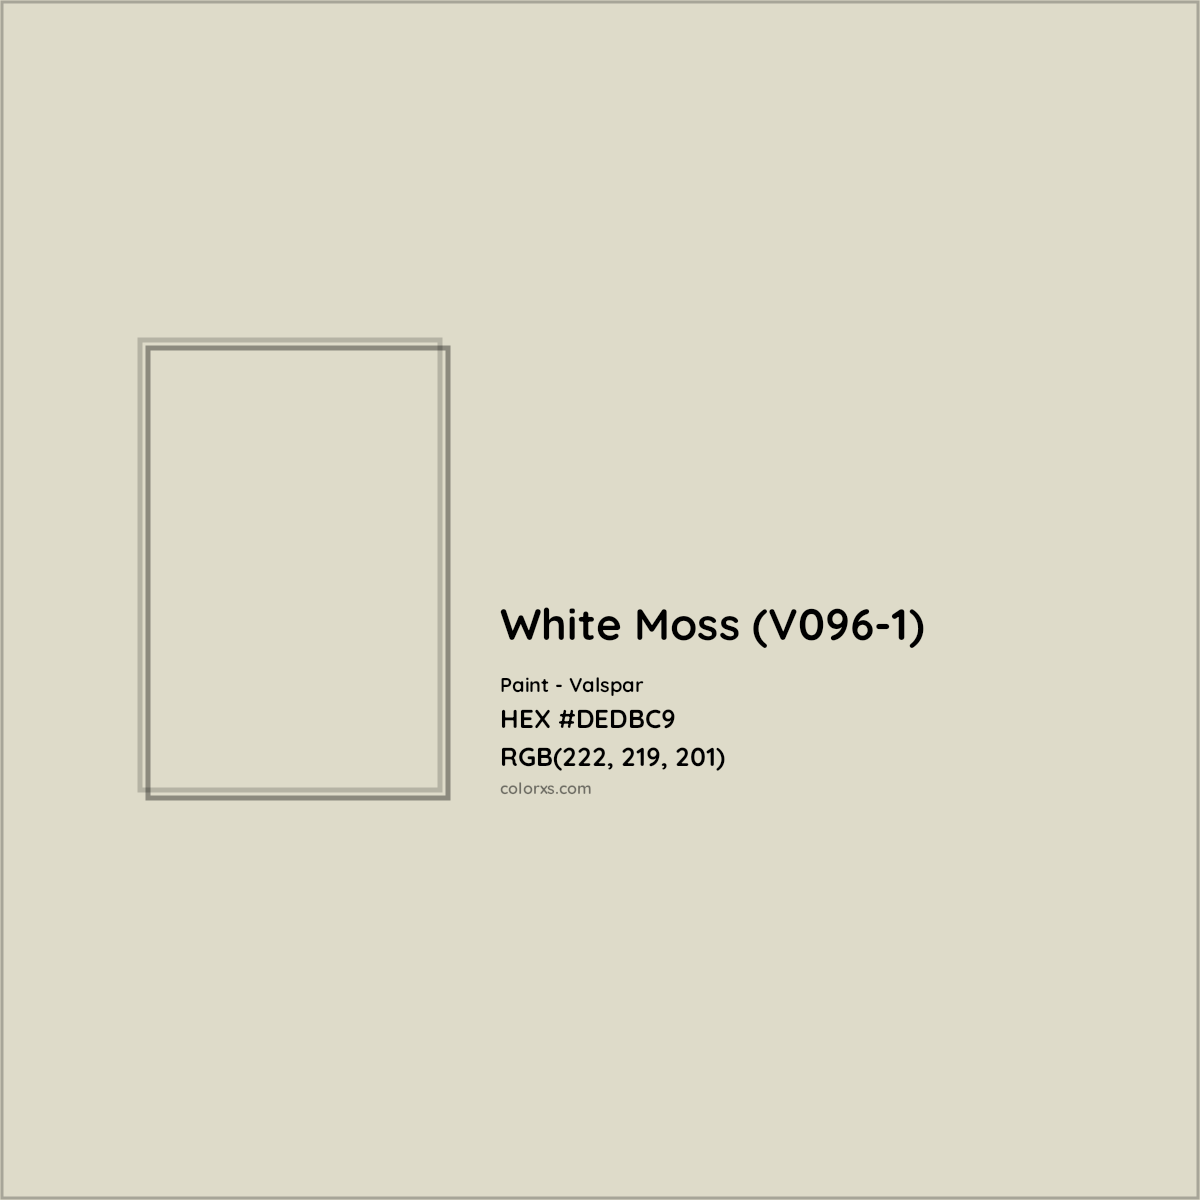 HEX #DEDBC9 White Moss (V096-1) Paint Valspar - Color Code